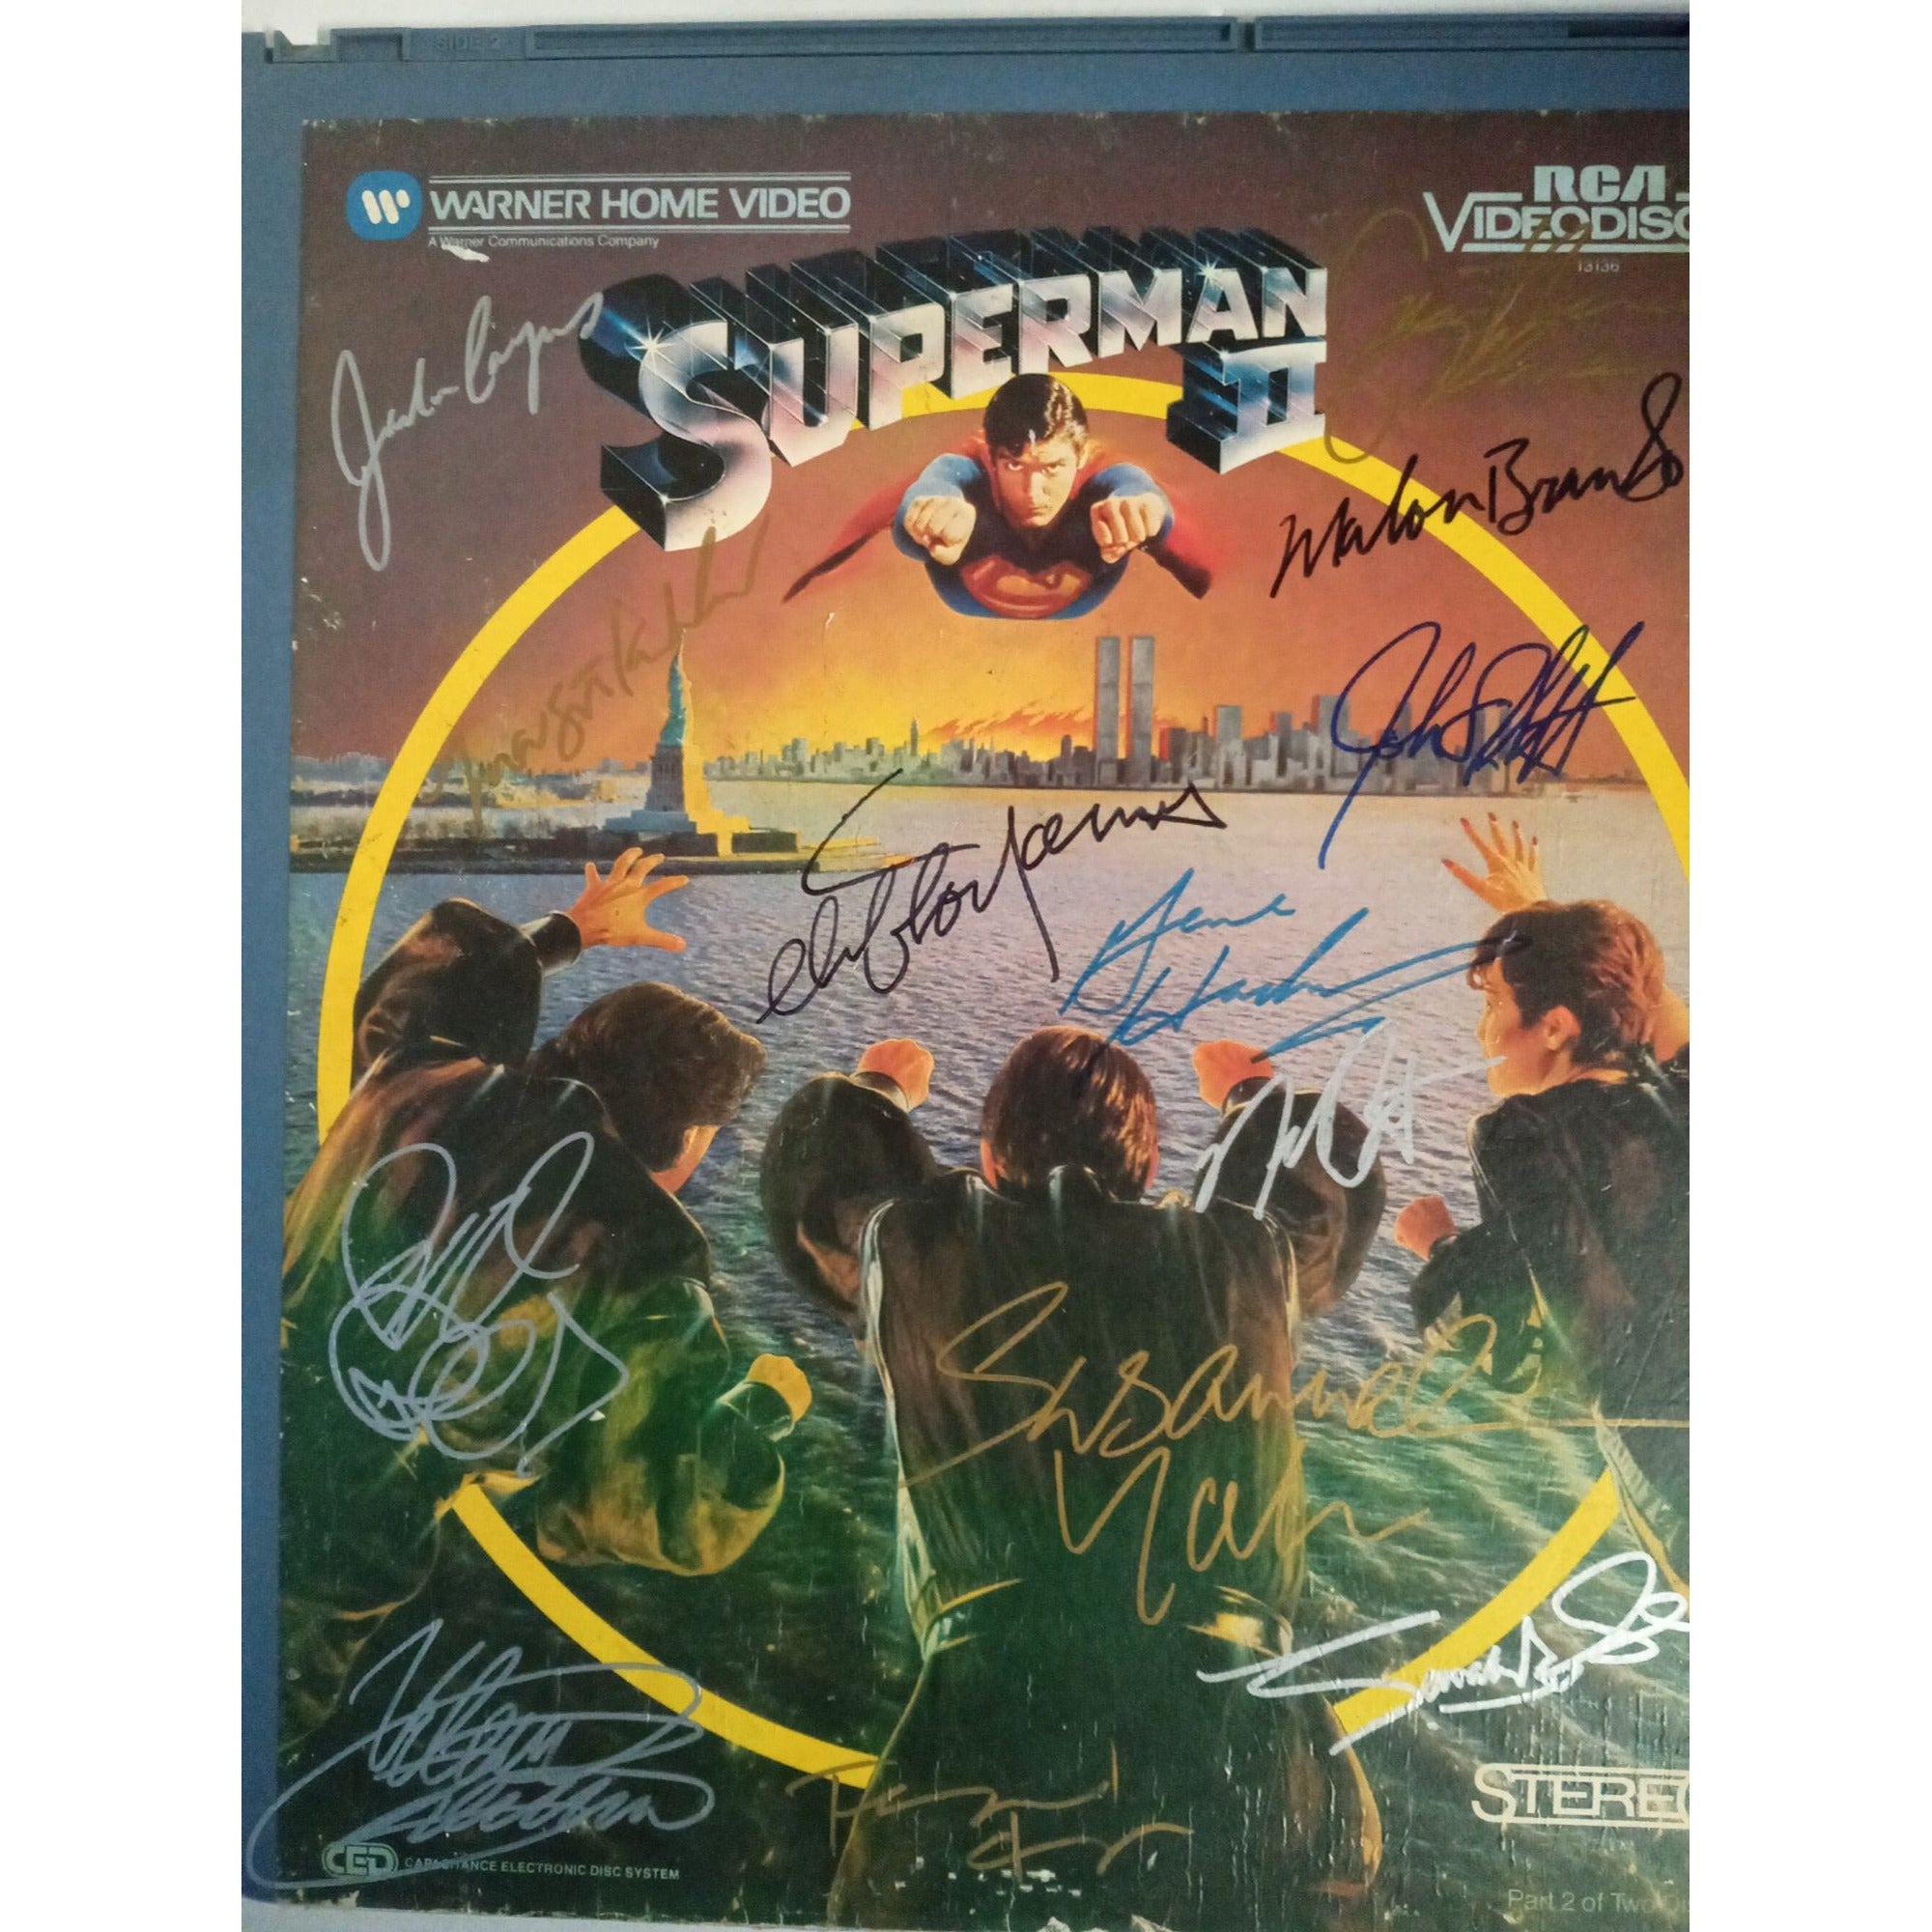 Superman 2 Christopher Reeve Gene Hackman Marlon Brando cast signed video disc